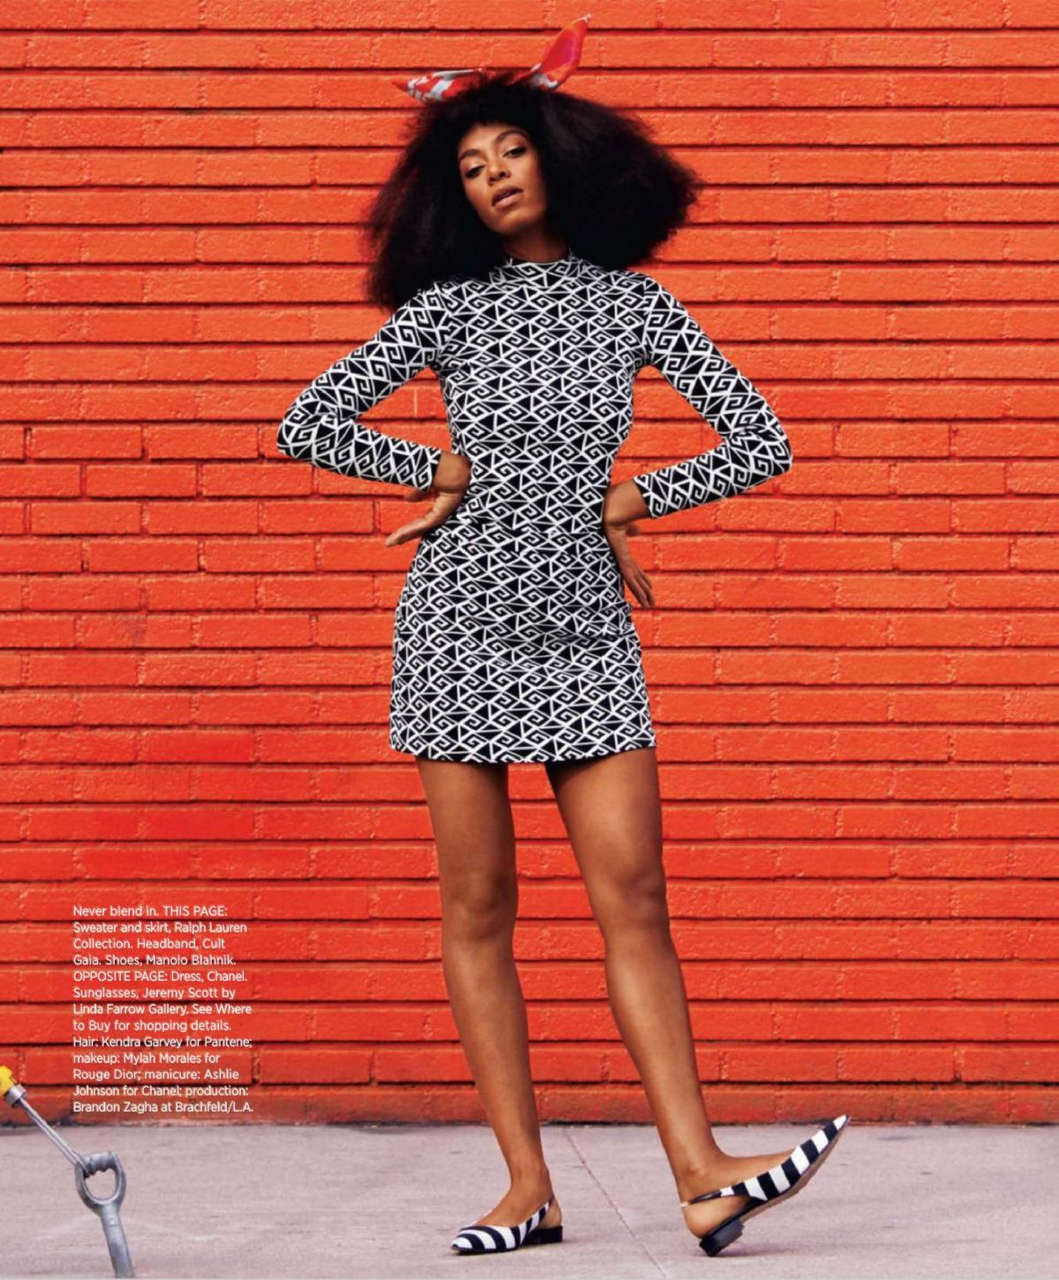 Solange Knowles Harpers Bazaar Magazine April 2014 Issue